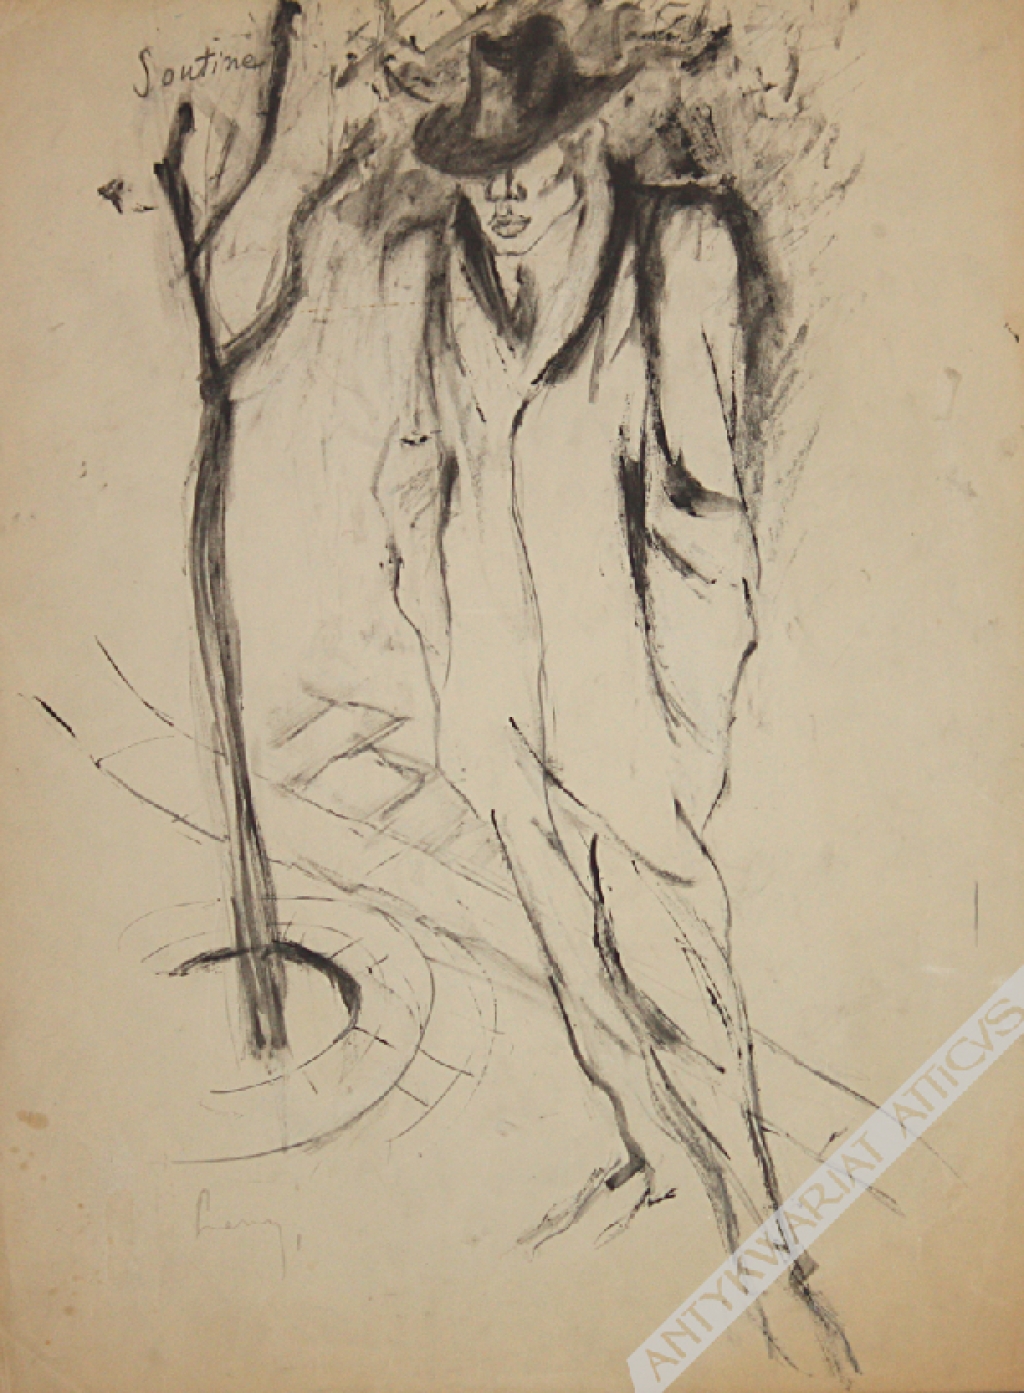 [rysunek, ok. 1949] Portret Chaima Soutine'a (1893-1943)